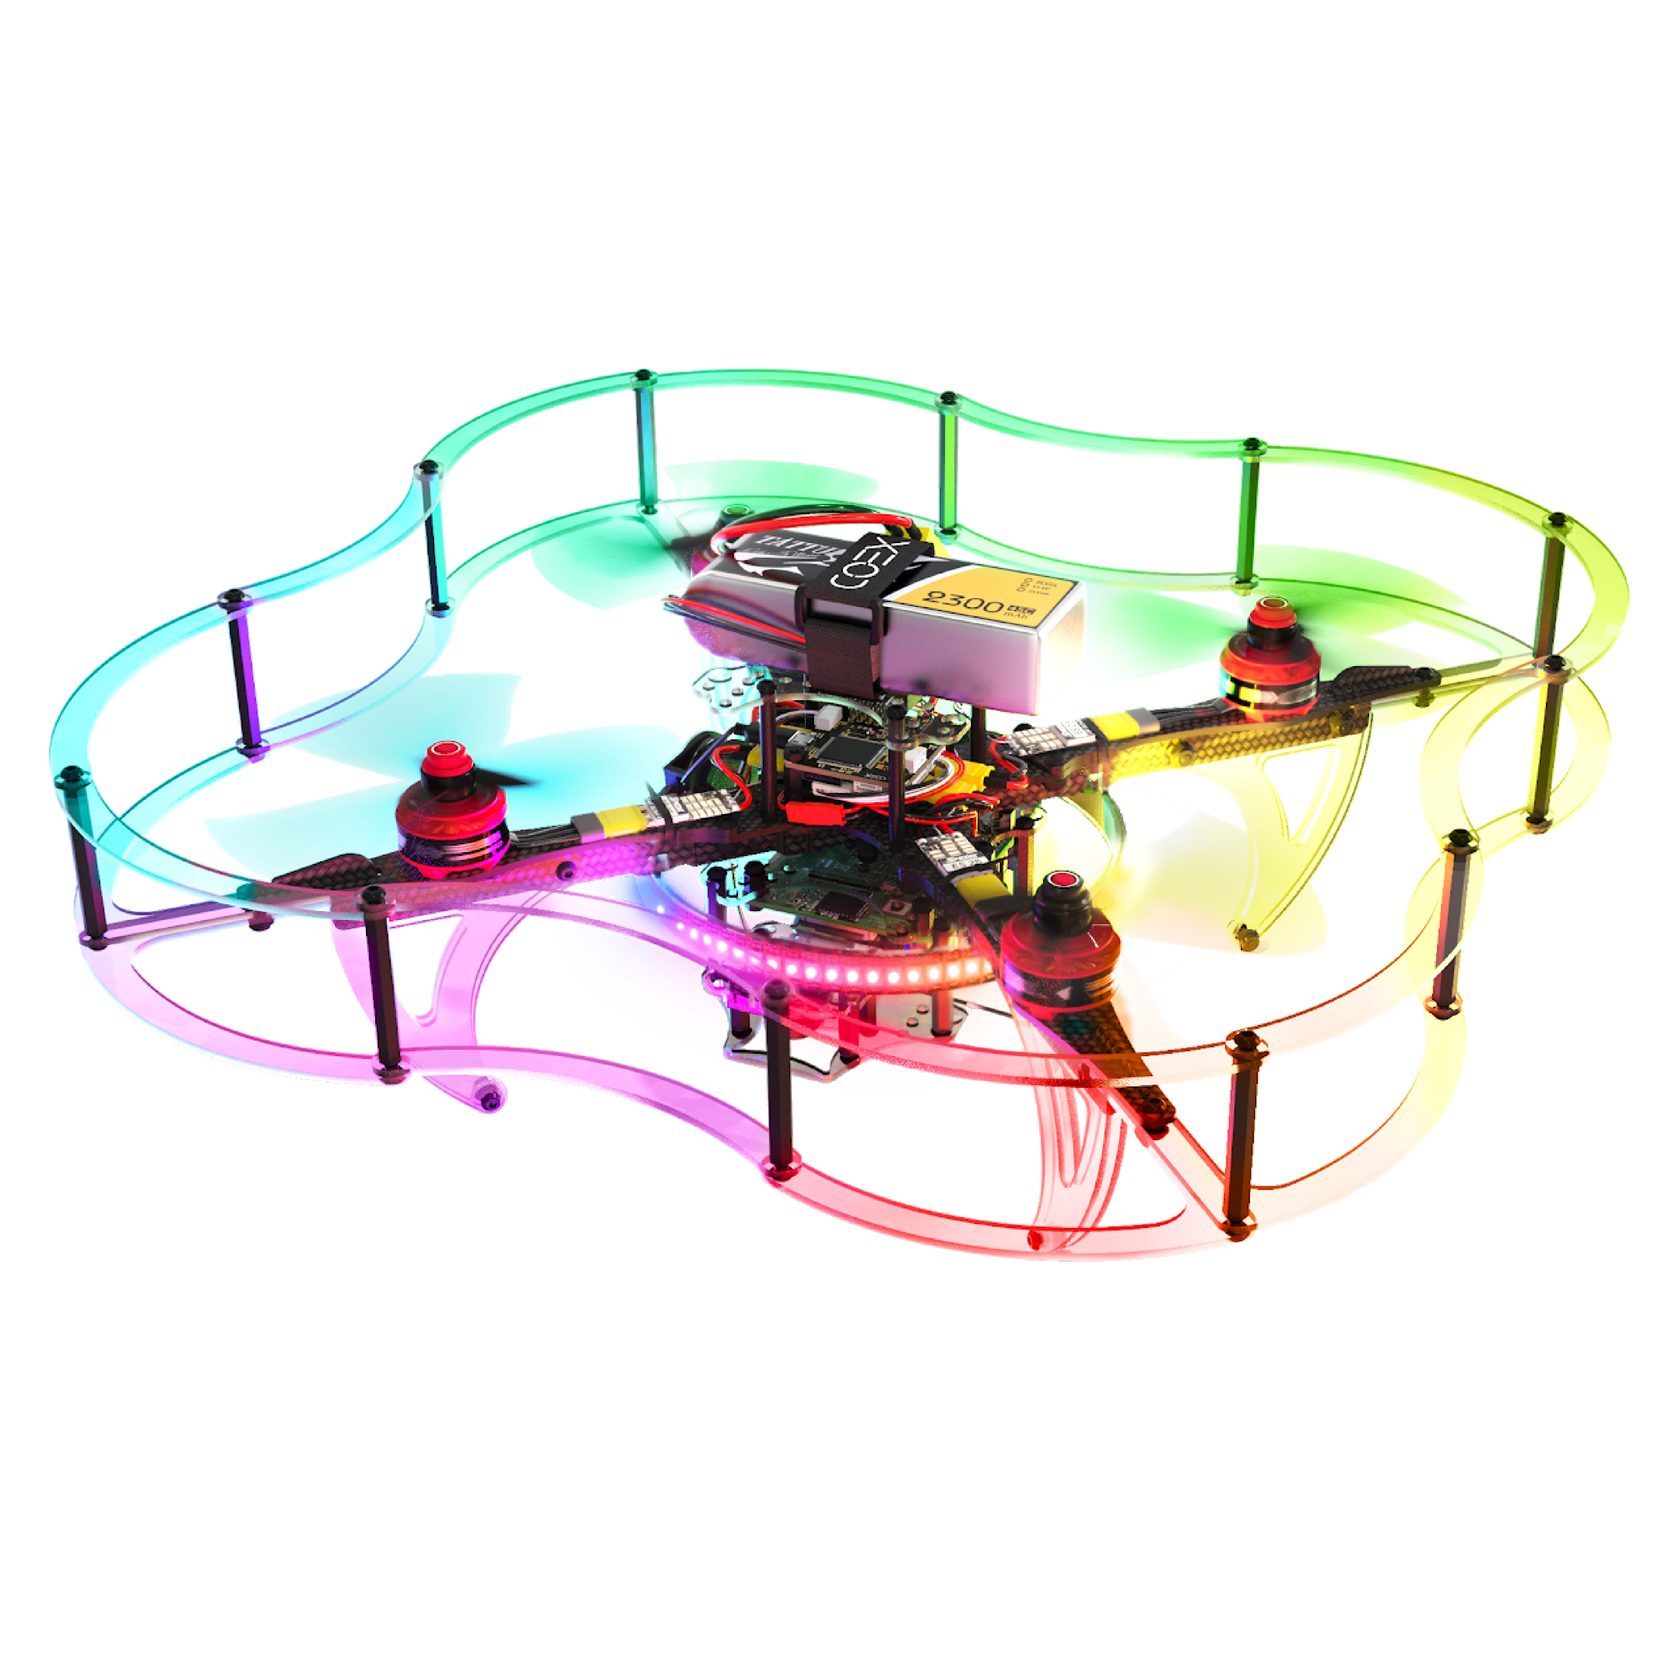 COEX Clover Drone kit